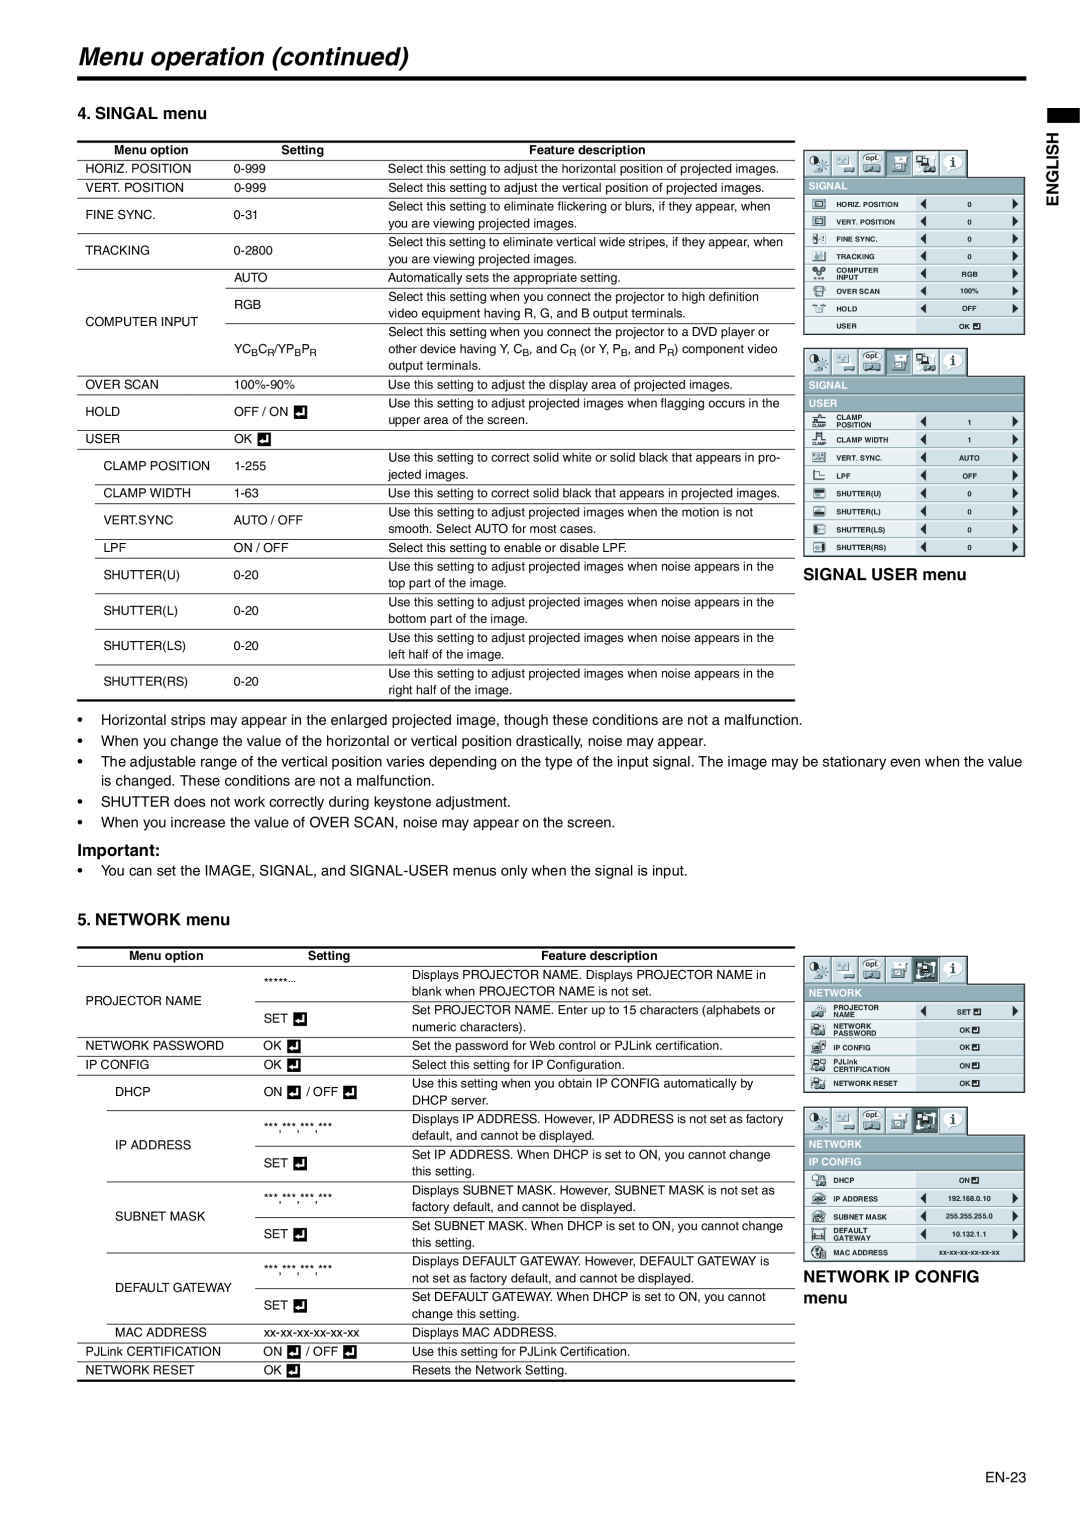 Mitsubishi Electronics XD250U-G SINGAL menu, SIGNAL USER menu, NETWORK menu, Network Ip Config, Menu operation continued 